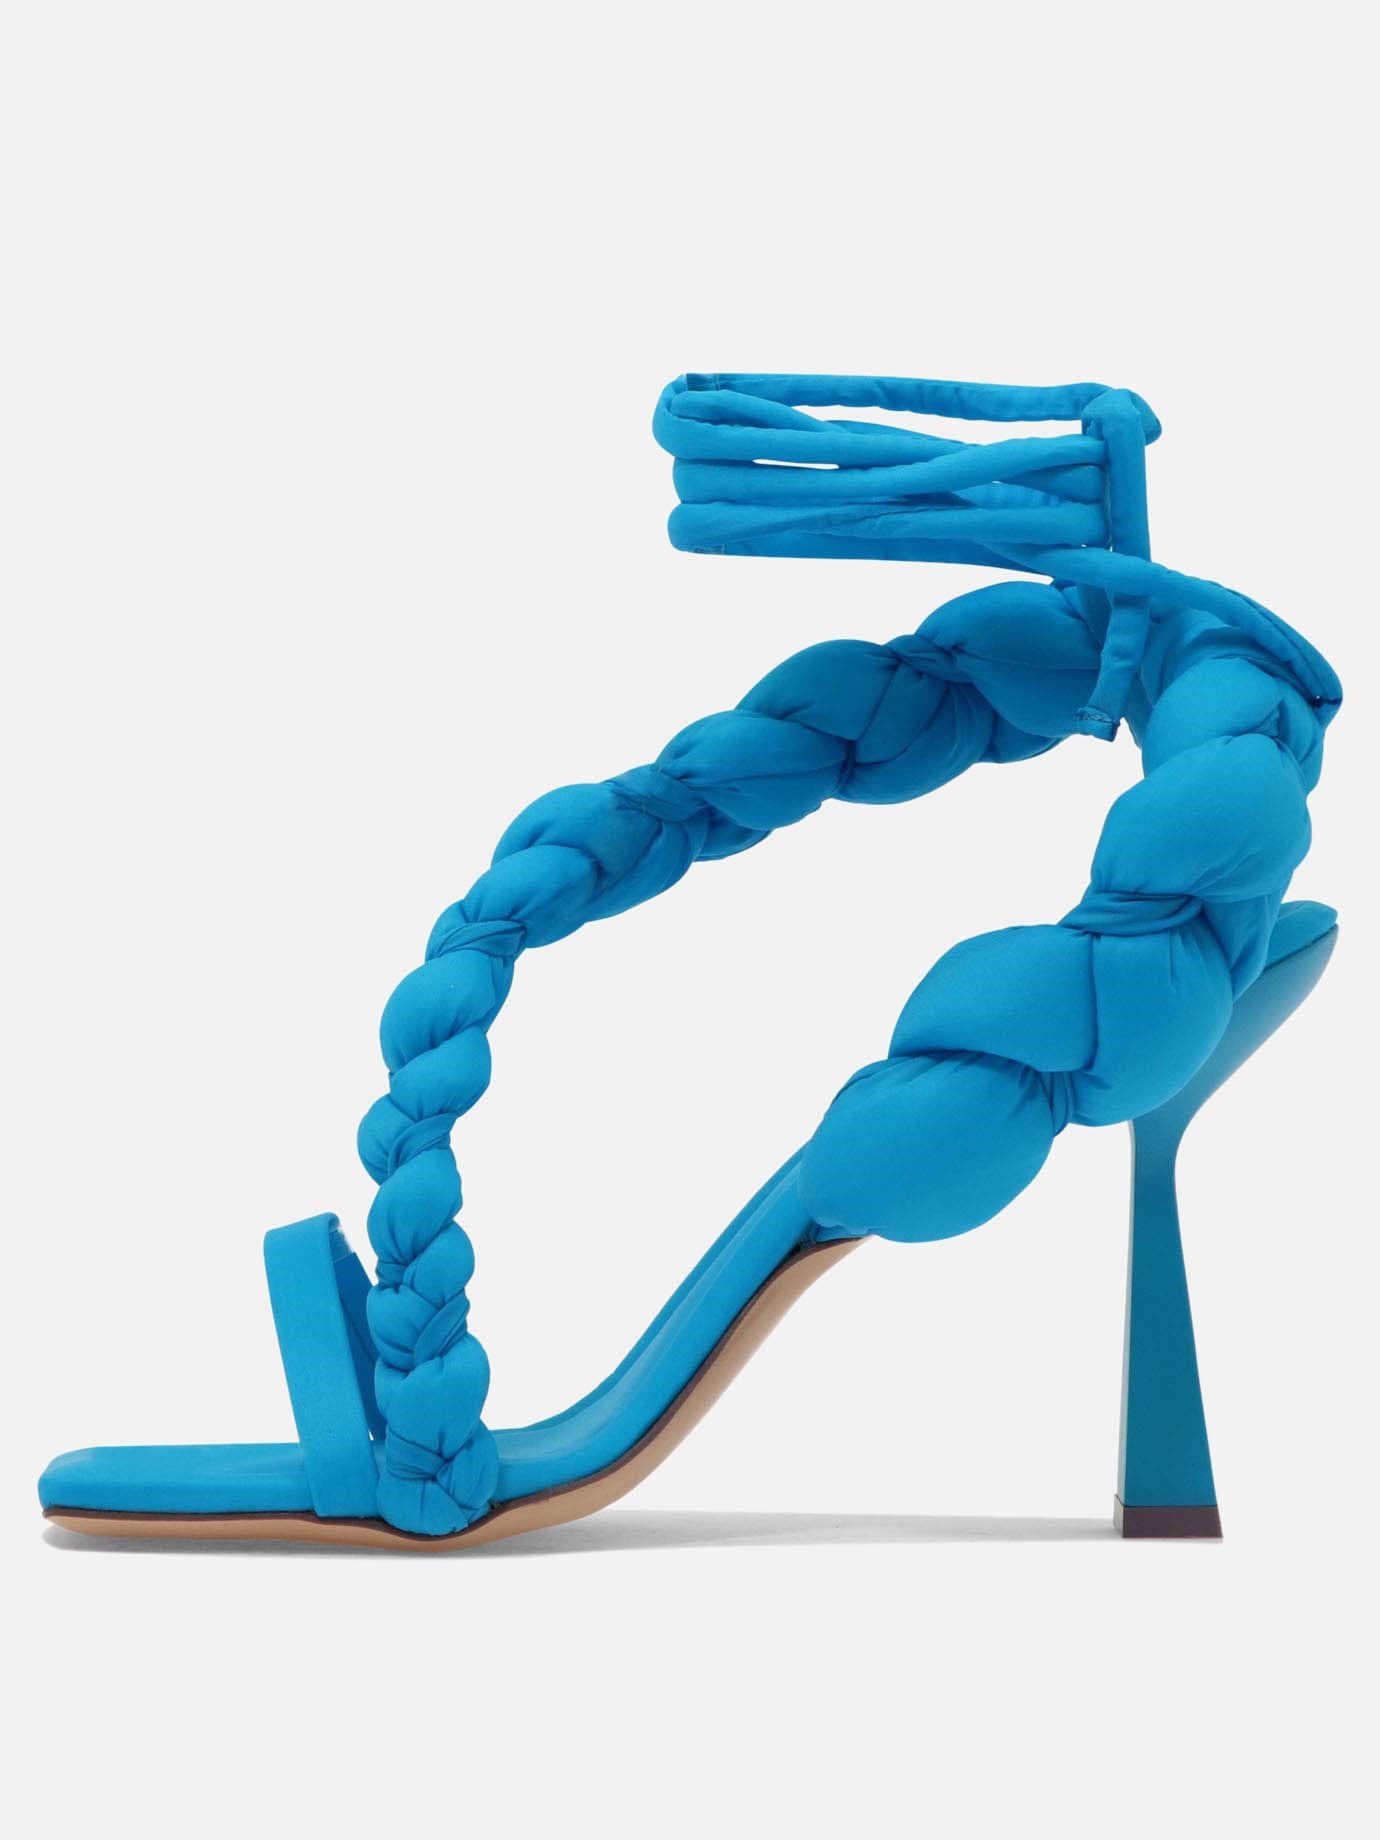  Untangled  sandals by Sebastian Milano